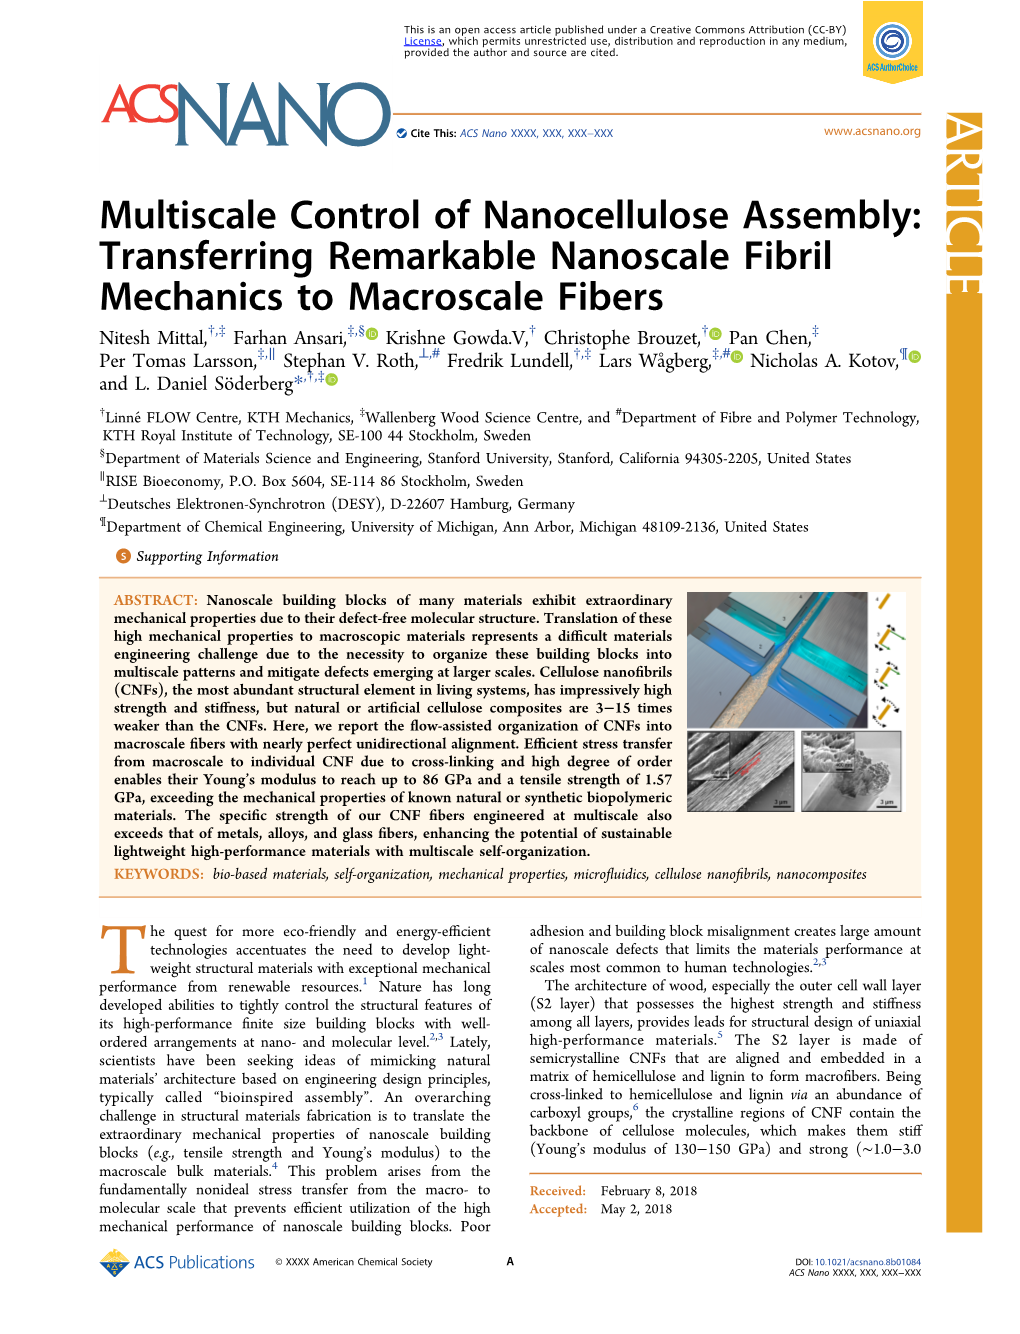 Multiscale Control of Nanocellulose Assembly: Transferring Remarkable Nanoscale Fibril Mechanics to Macroscale Fibers